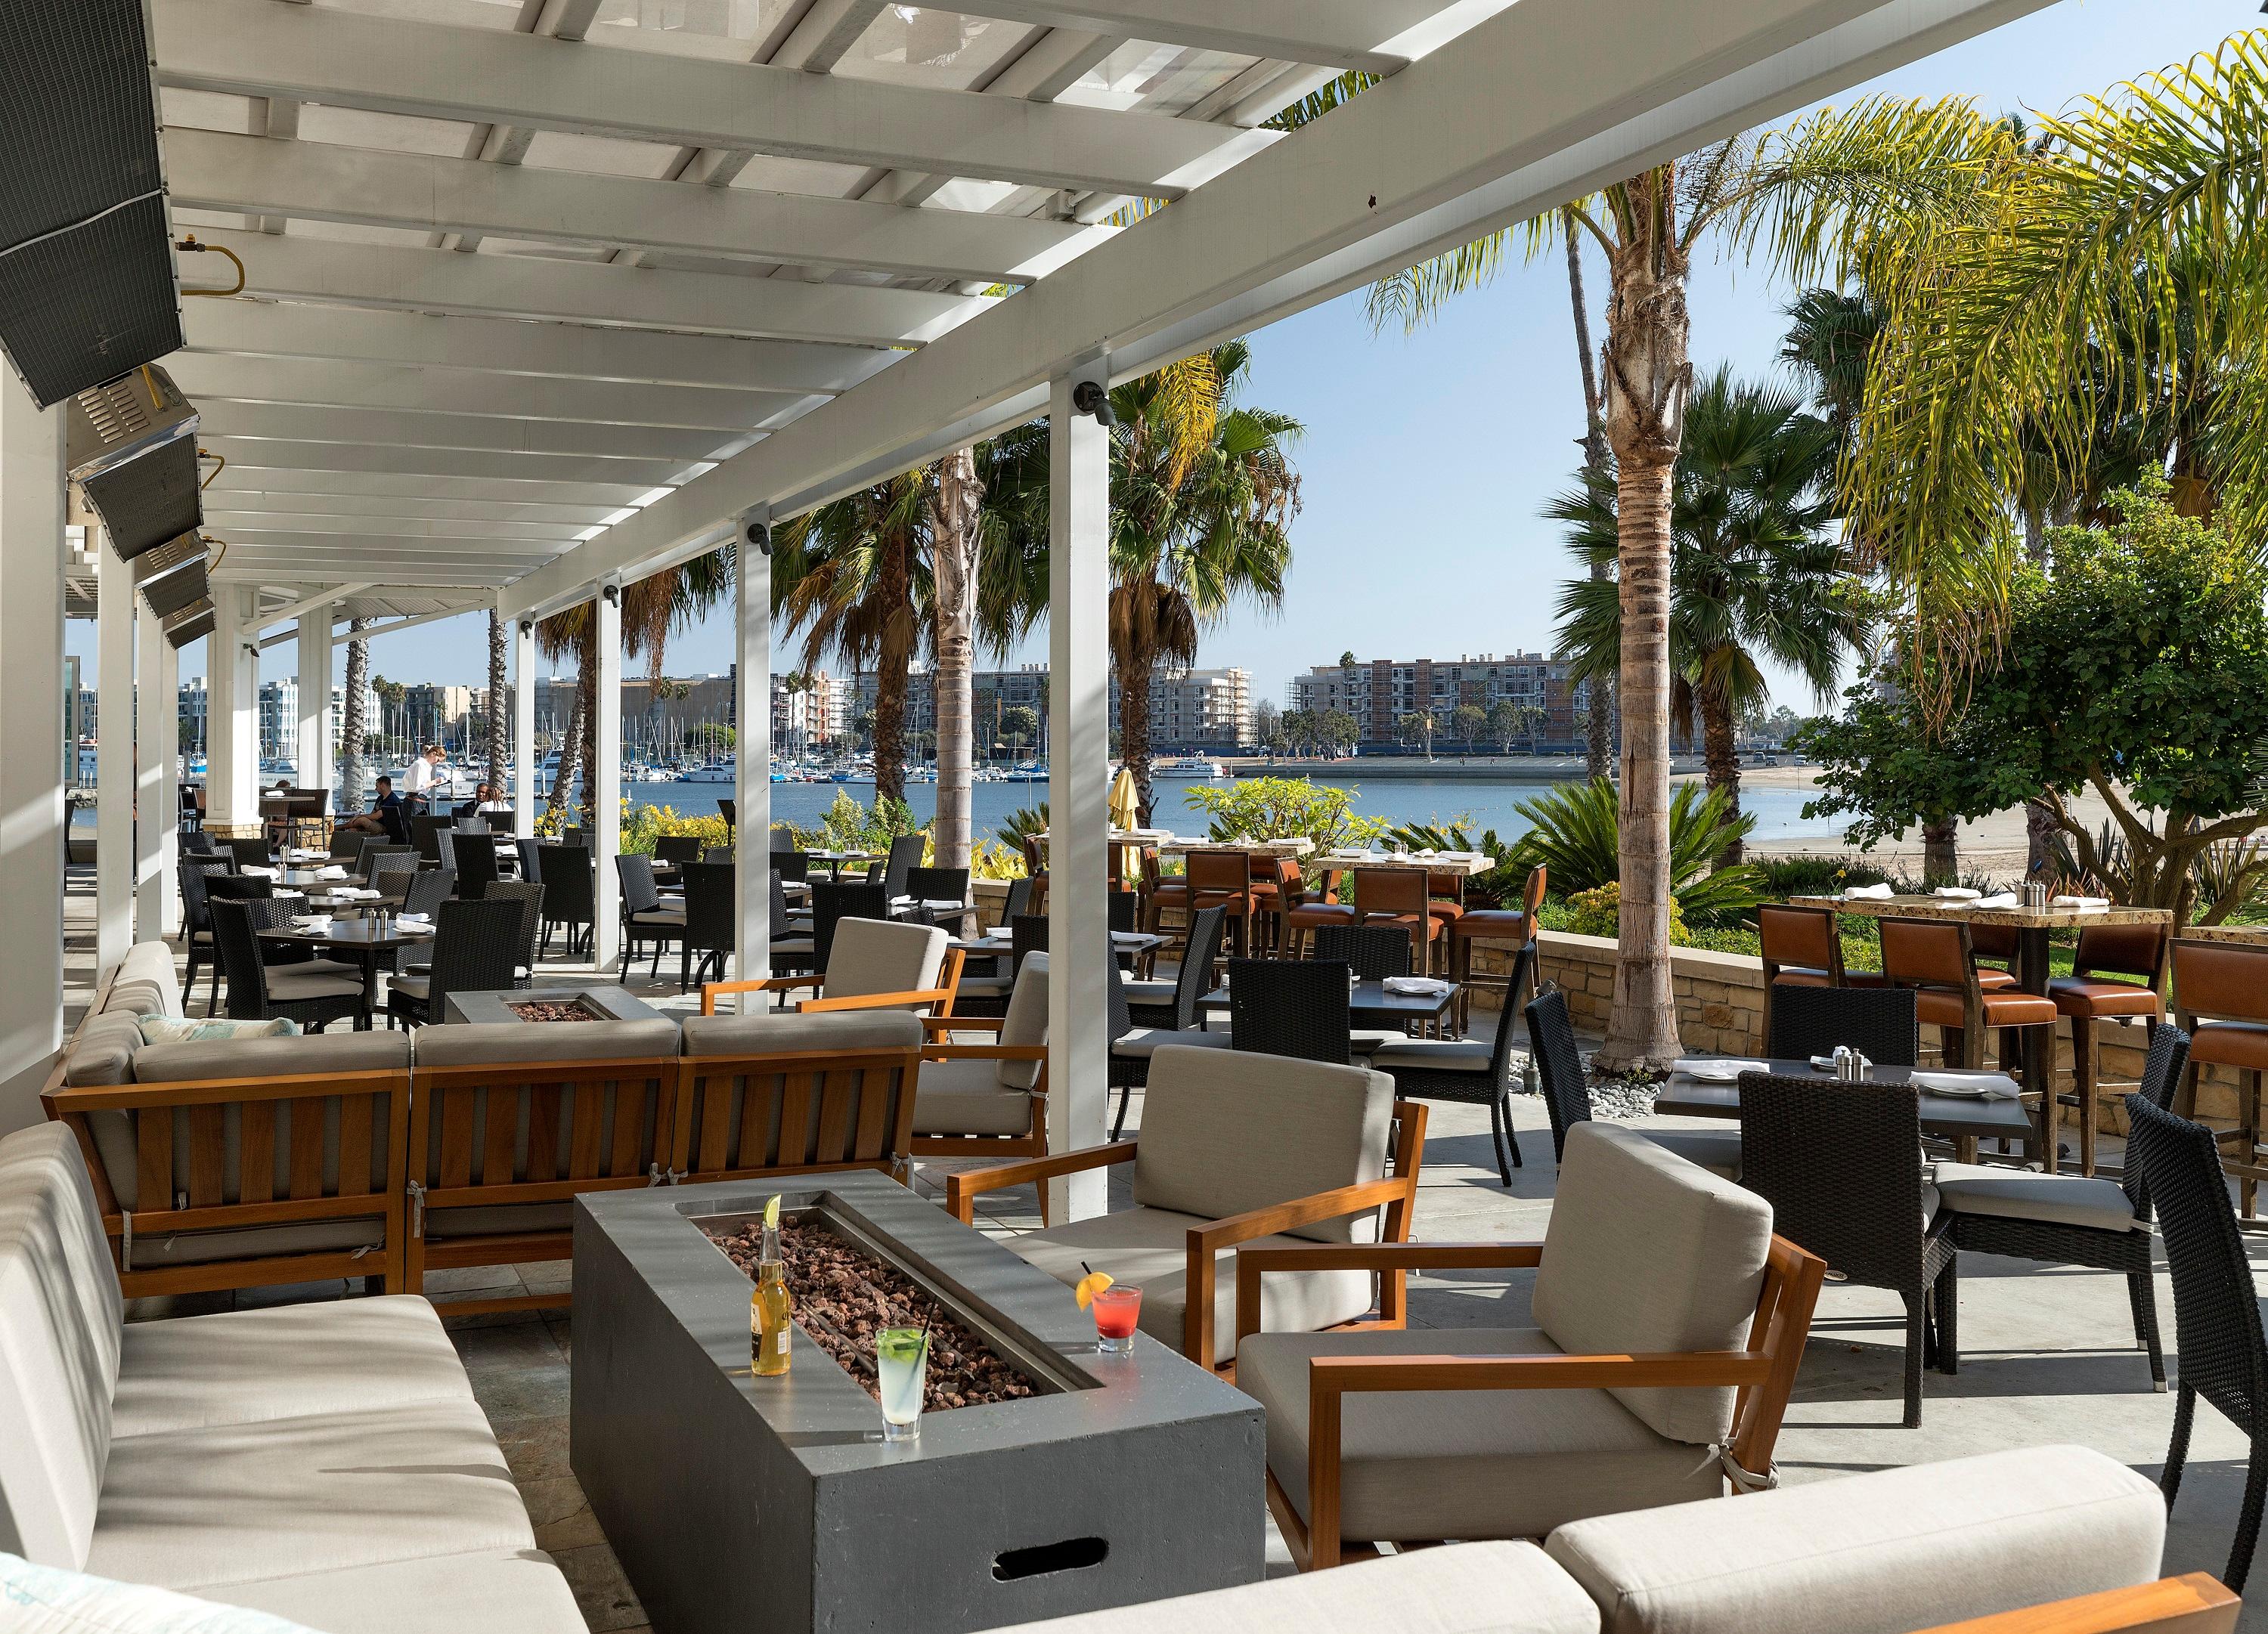 Beachside Restaurant & Bar - Marina Del Rey, CA - Business Information